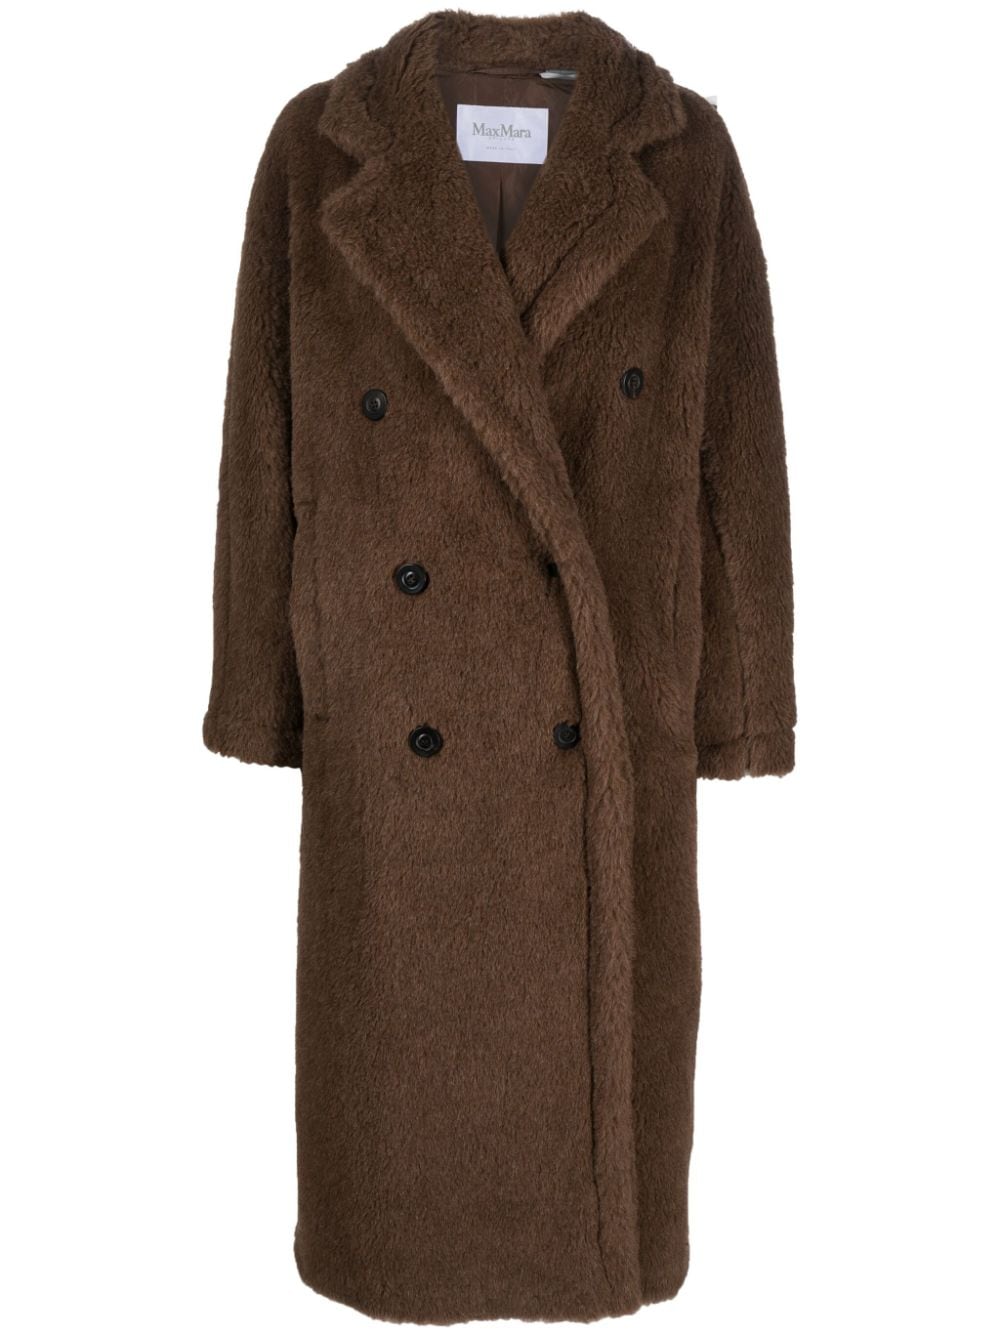 Brown S Max Mara Venice coat, Max Mara